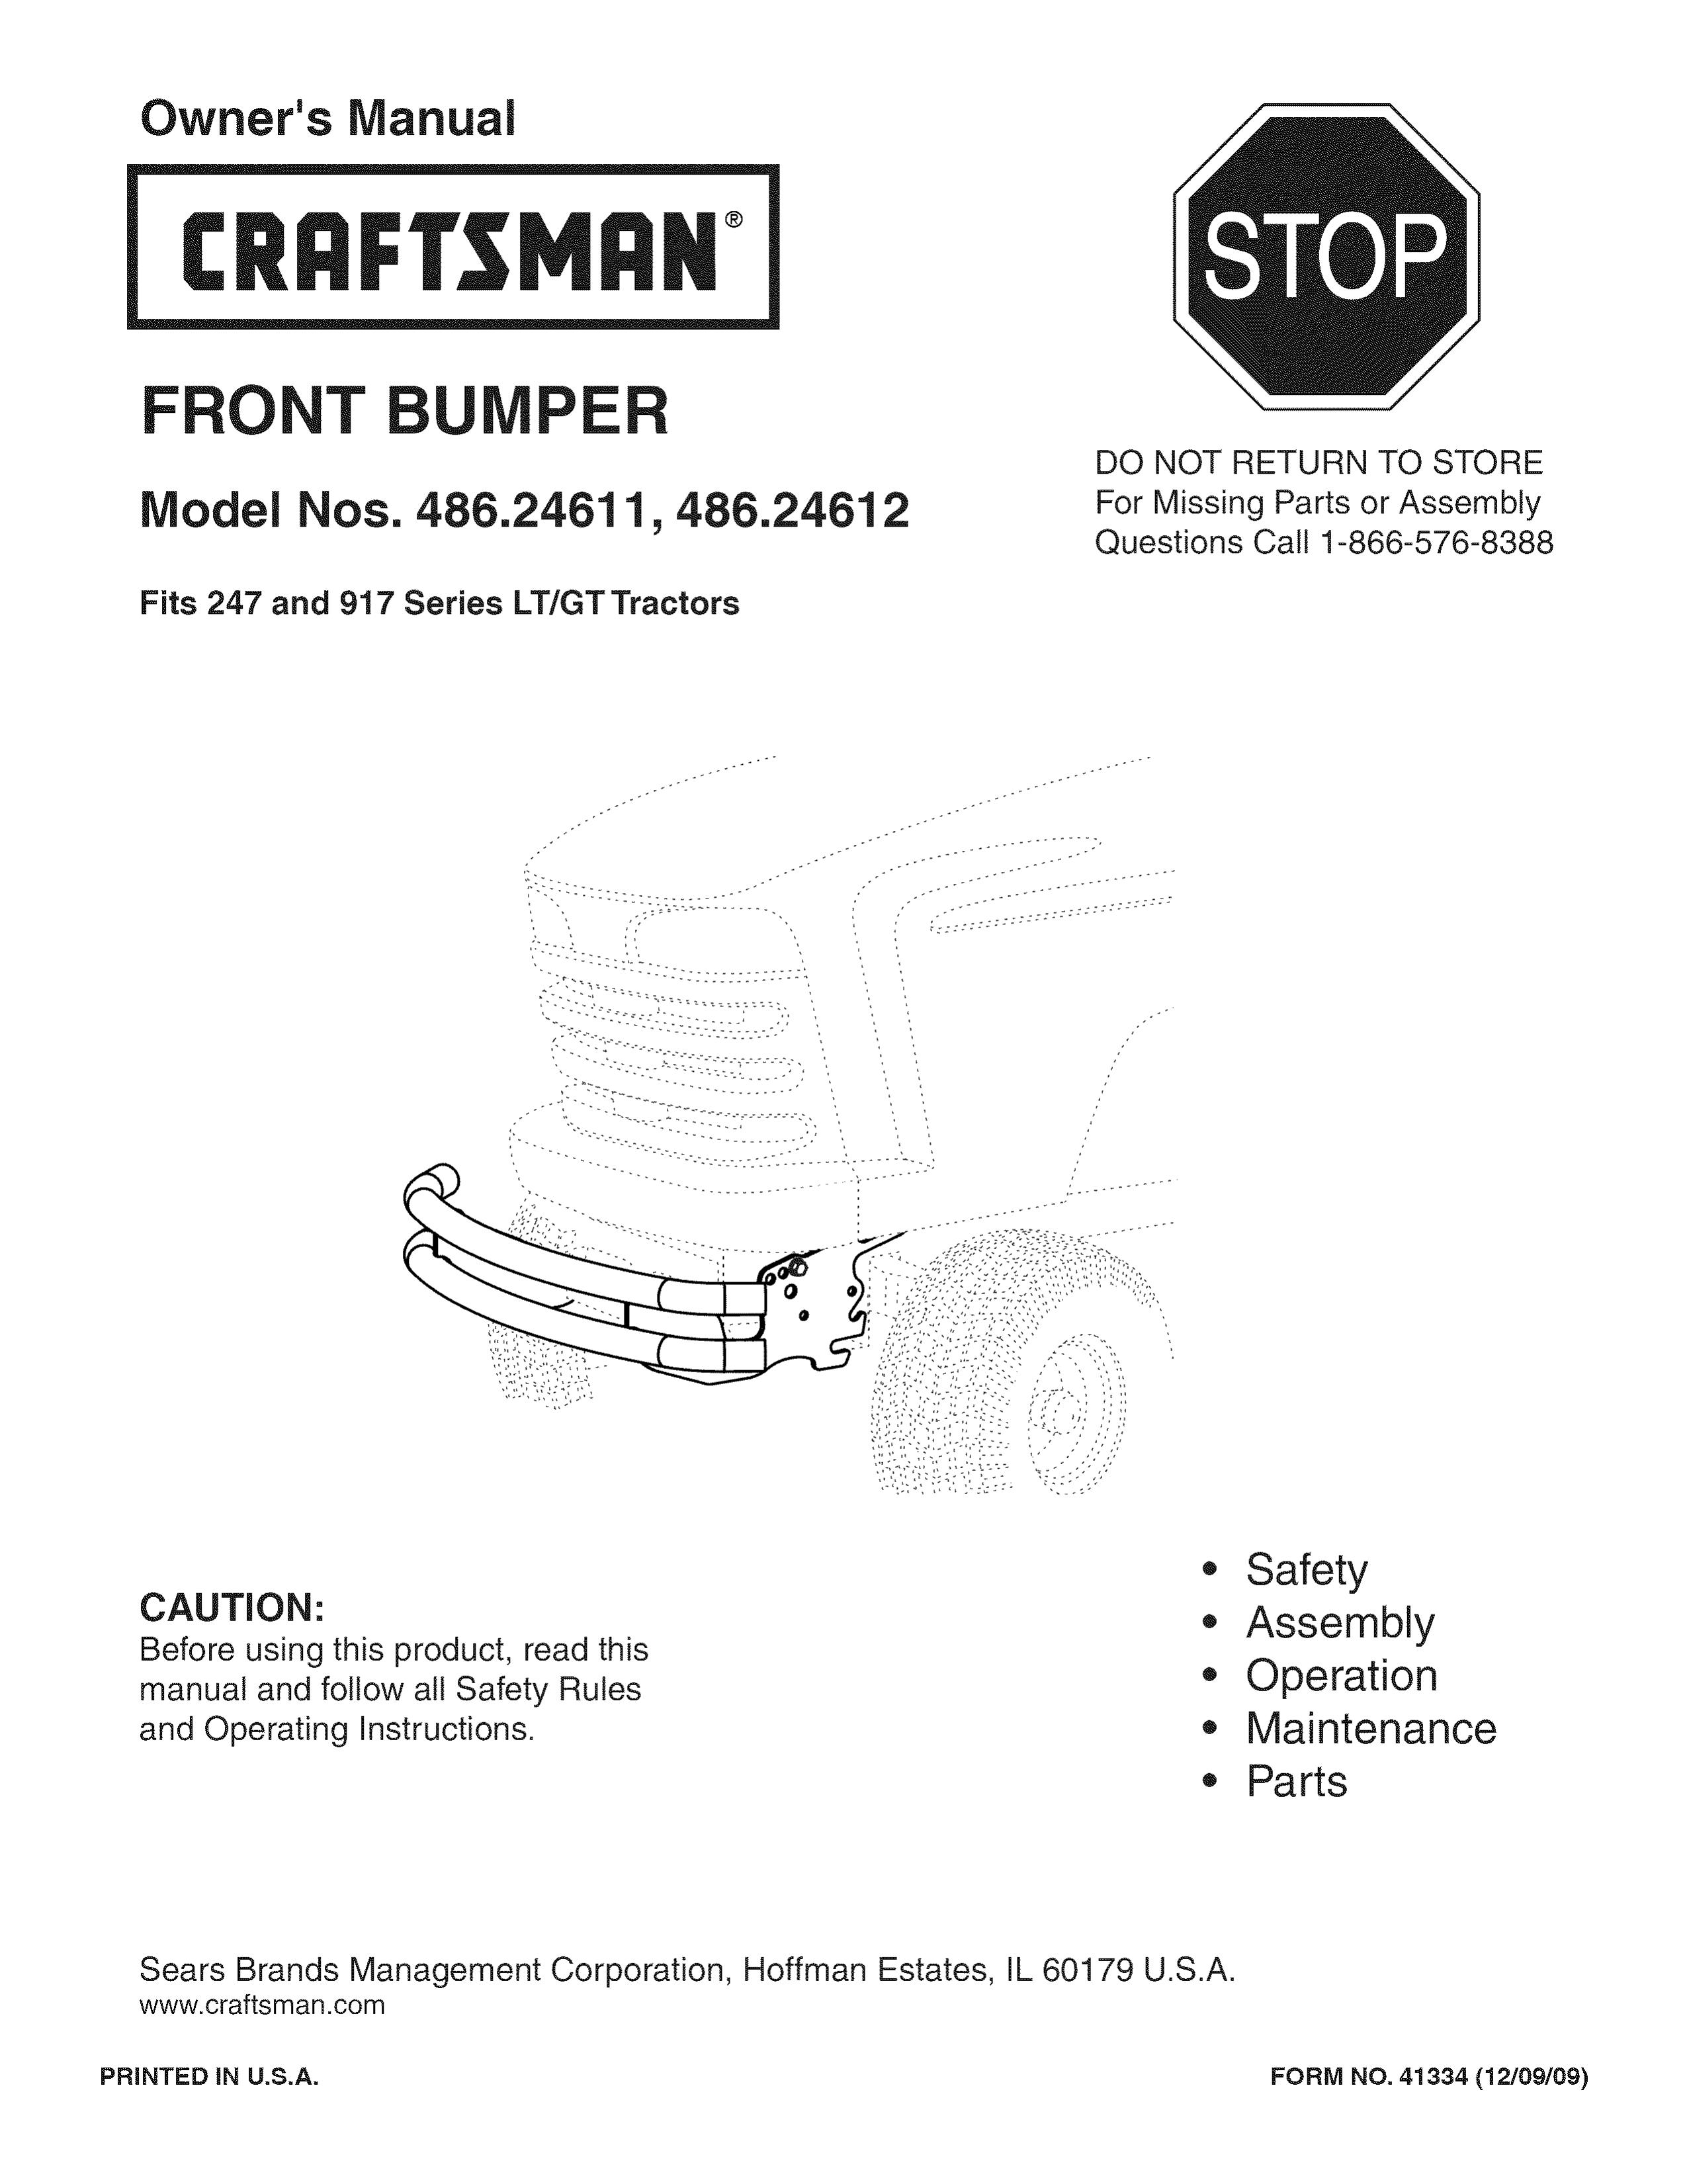 Craftsman 486.24612 Lawn Mower Accessory User Manual